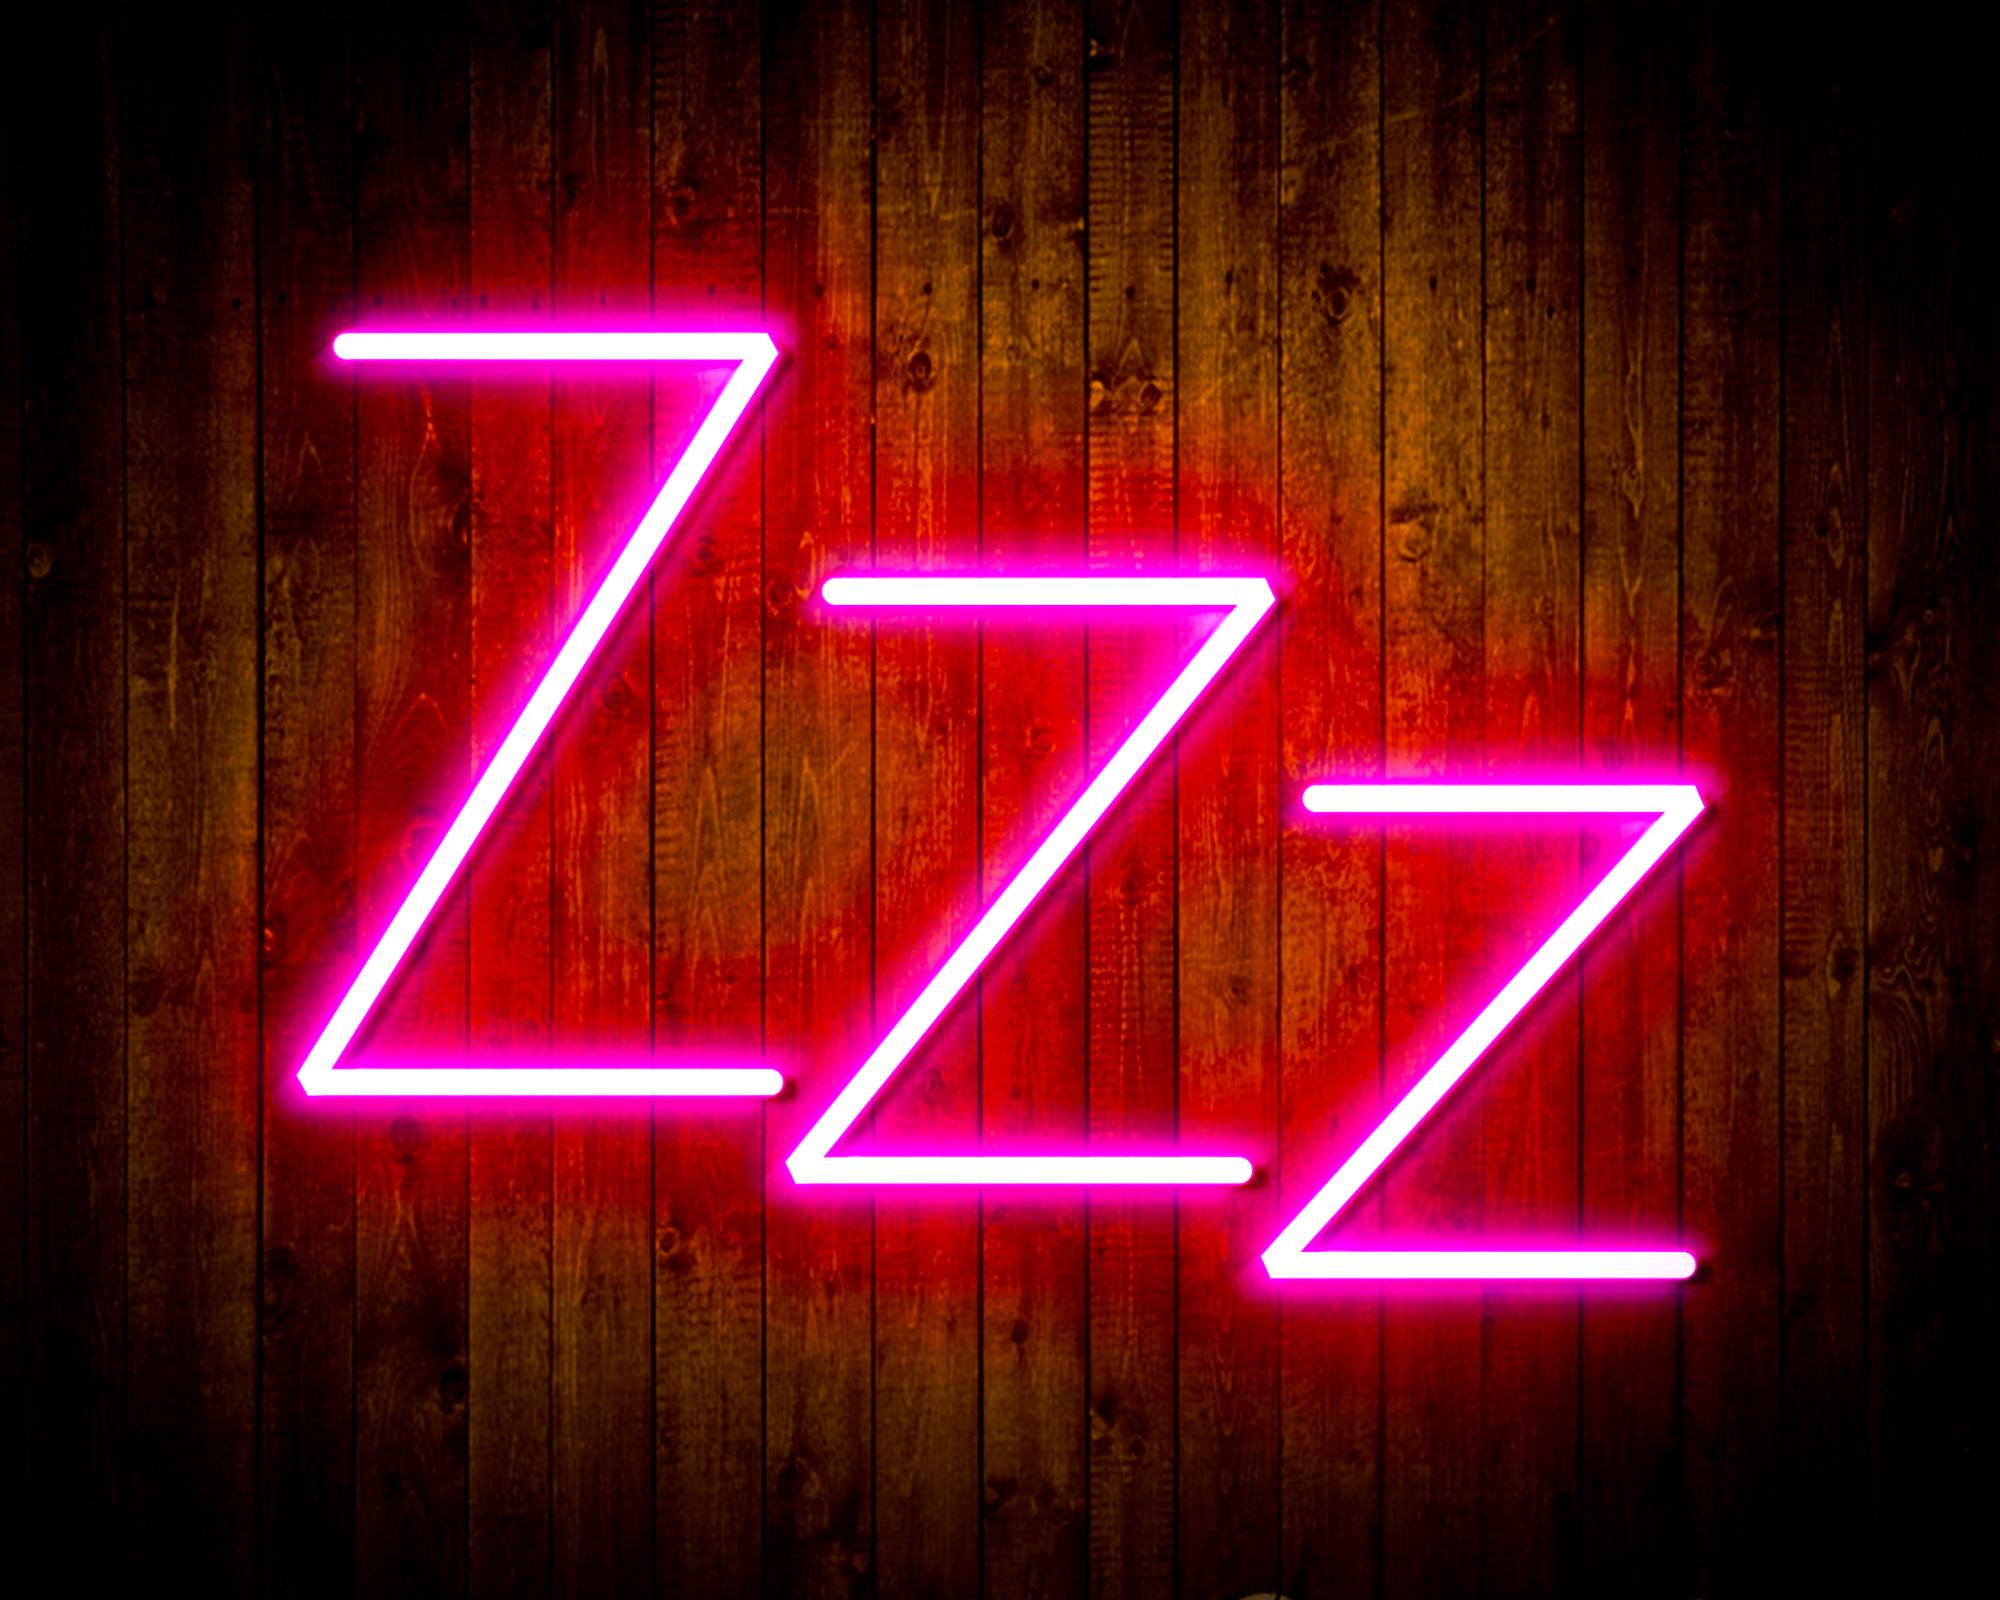 ZZZ LED Neon Sign Wall Light